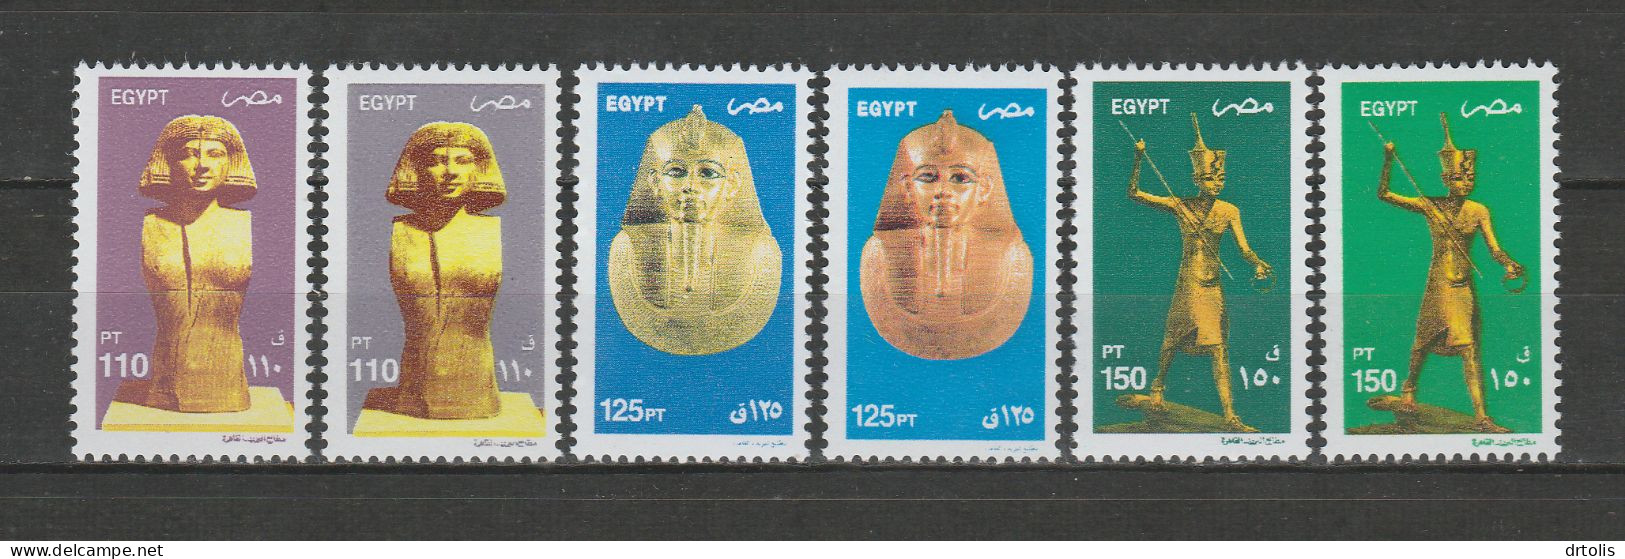 EGYPT / 2002 / THE REGULAR SET / A VERY RARE MARVELLOUS COLOR VARIETY COLLECTION / EGYPTOLOGY / ARCHEOLOGY / MNH / VF - Neufs